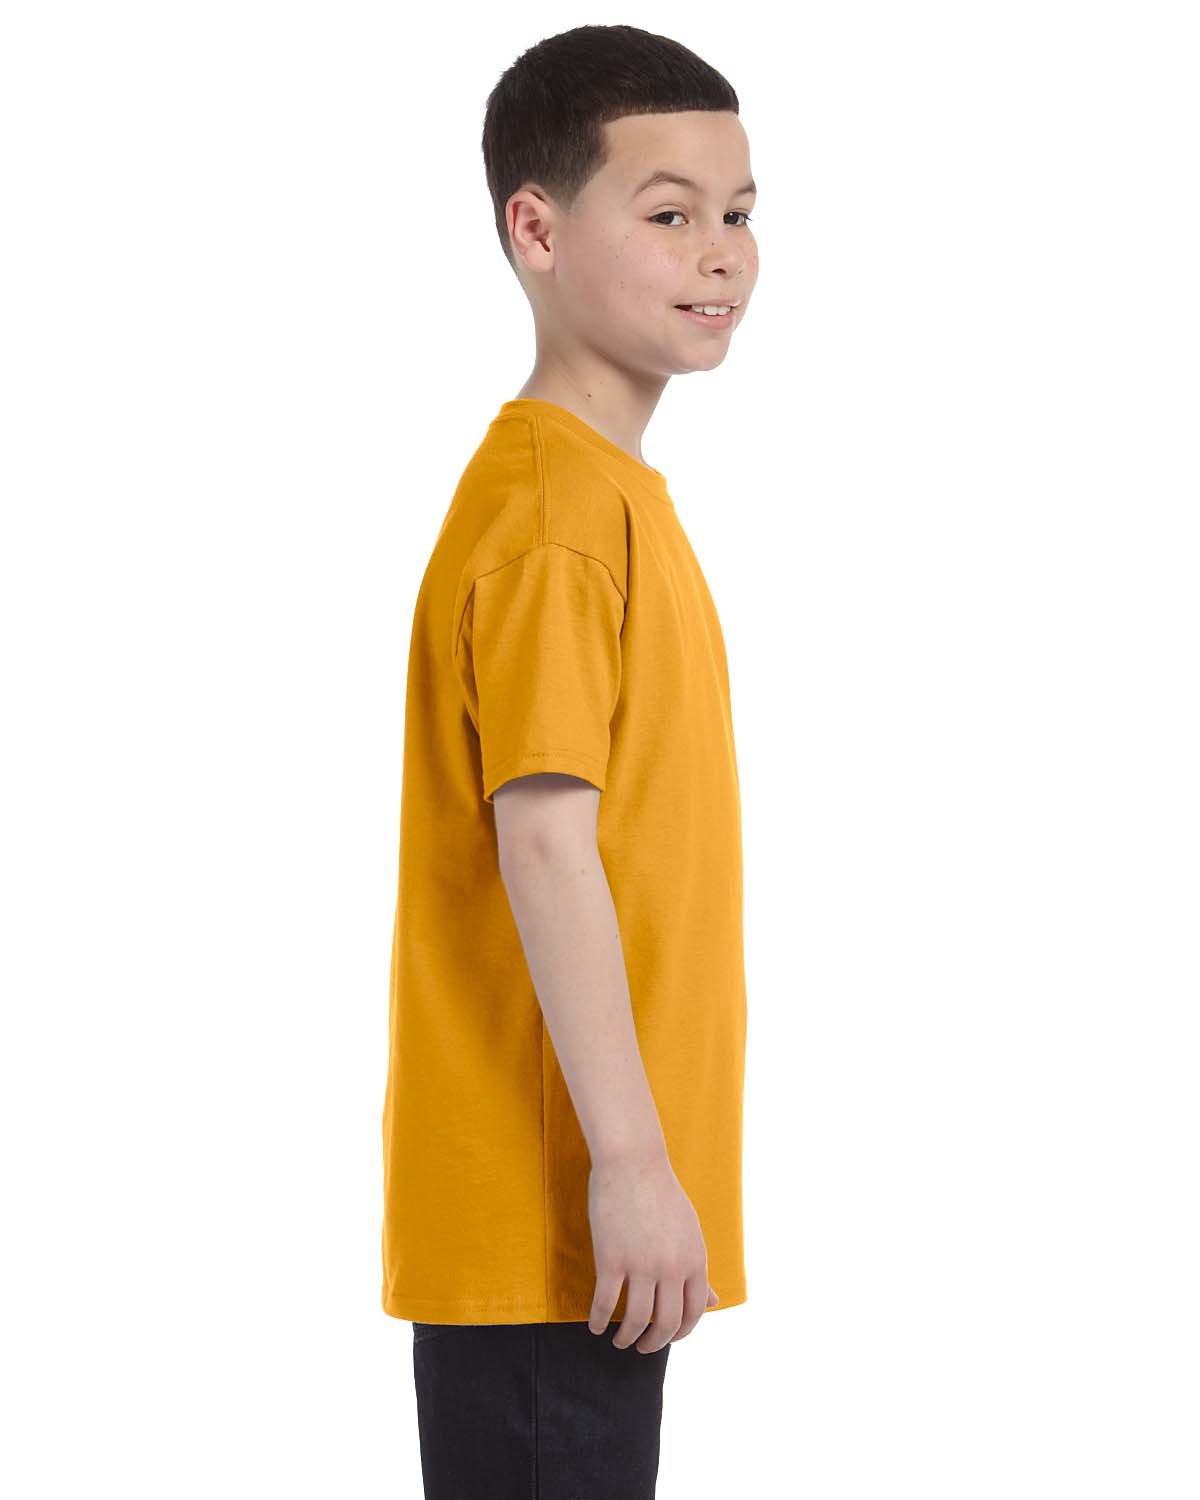 Hanes Youth 6.1 oz. Tagless T-Shirt